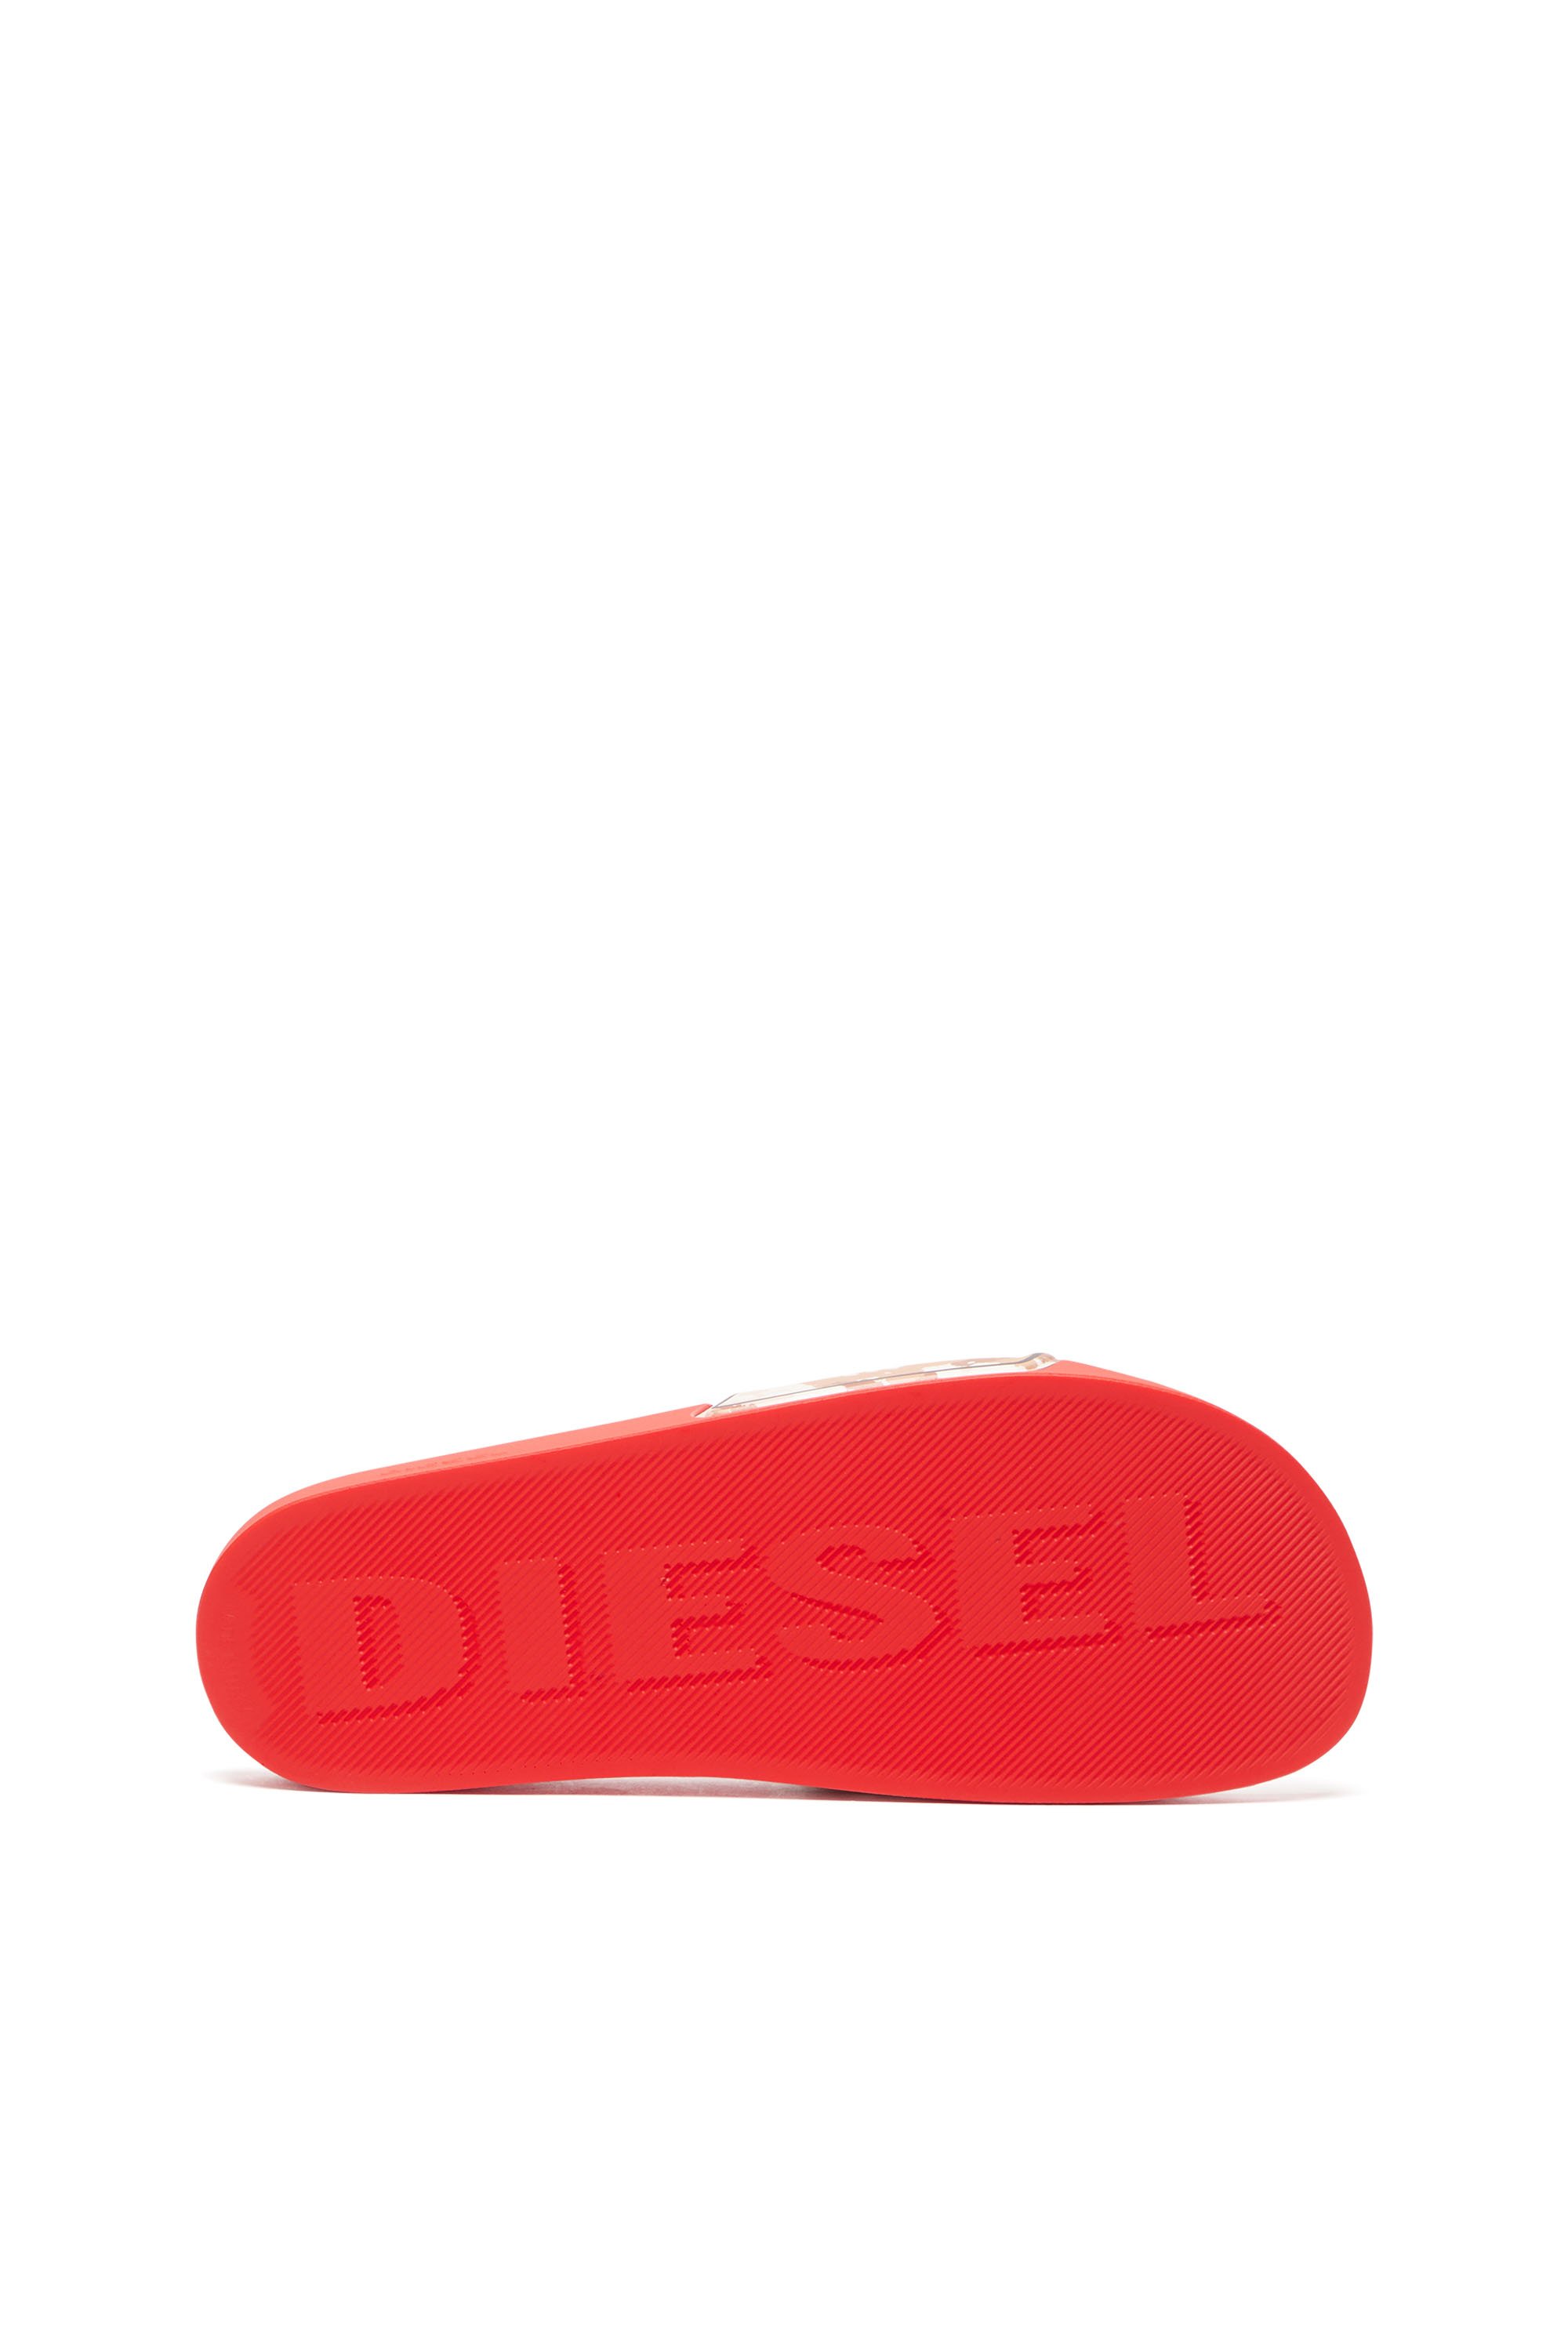 Diesel - SA-MAYEMI CC X, Unisex Sa-Mayemi CC X - Toboganes de piscina con banda de camuflaje in Rojo - Image 4